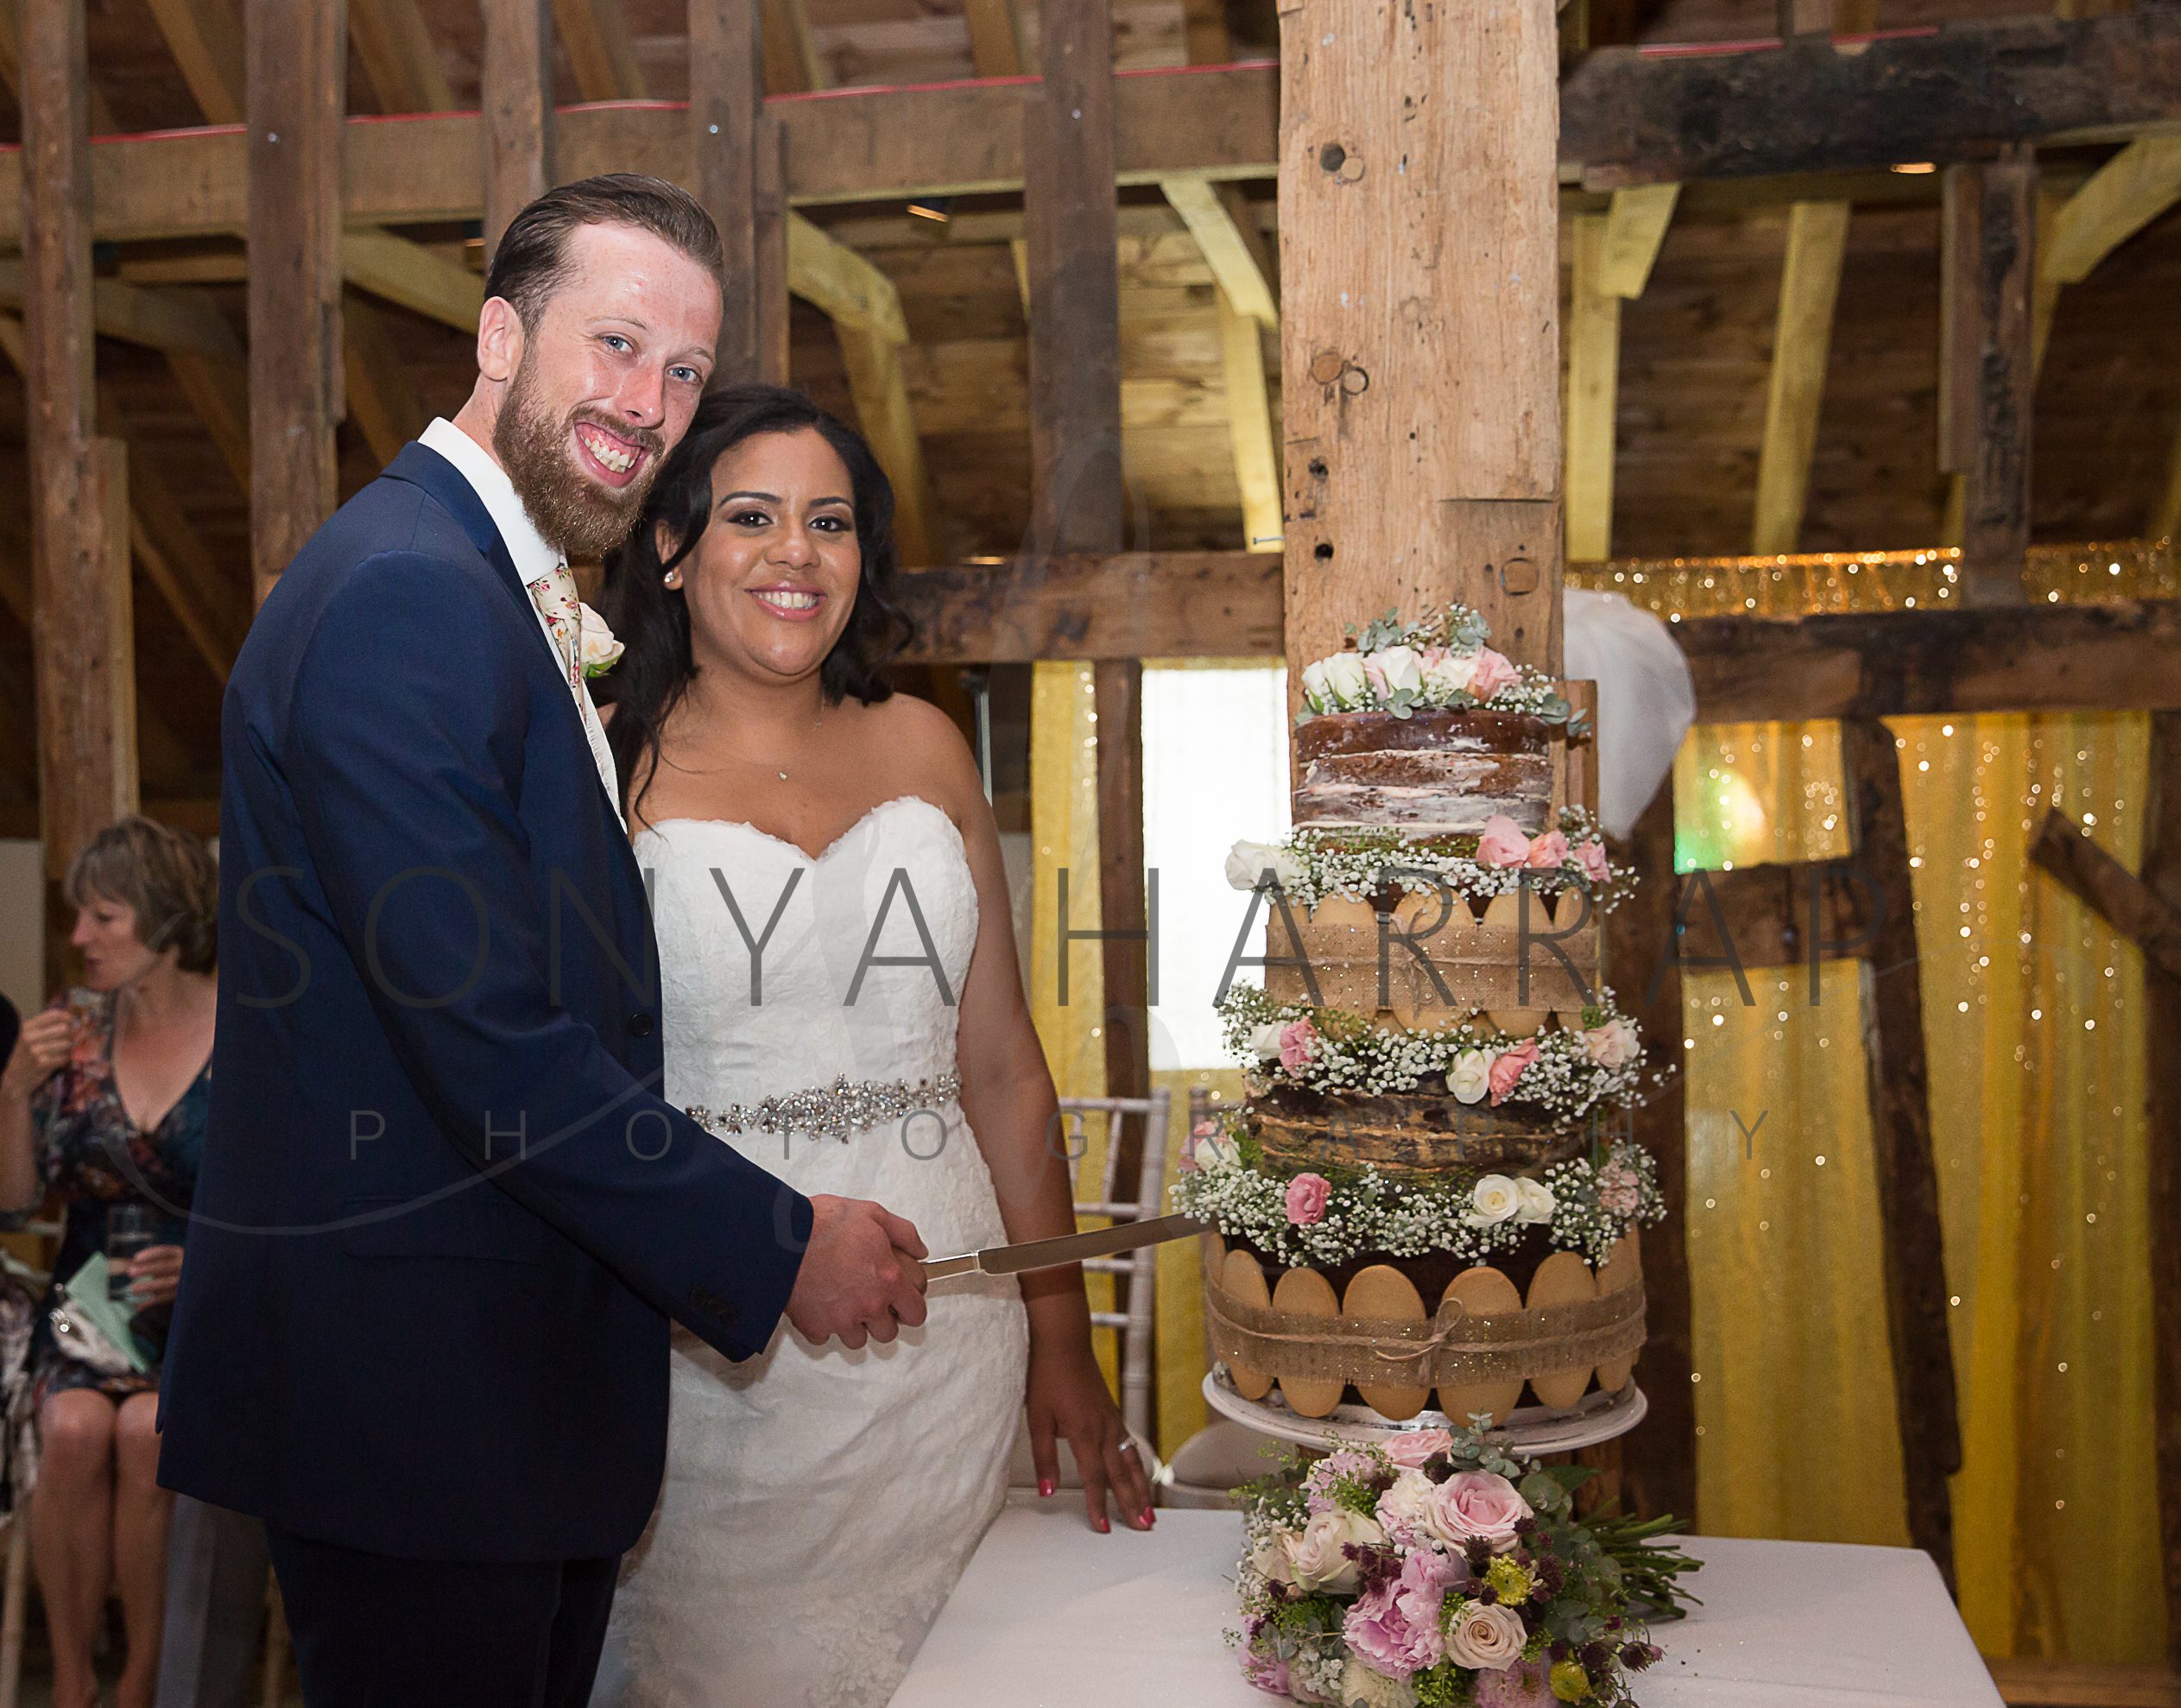 cake cutting in barn Tewinbury farm hotel wedding photograph of bride and groom by Sonya Harrap photographer